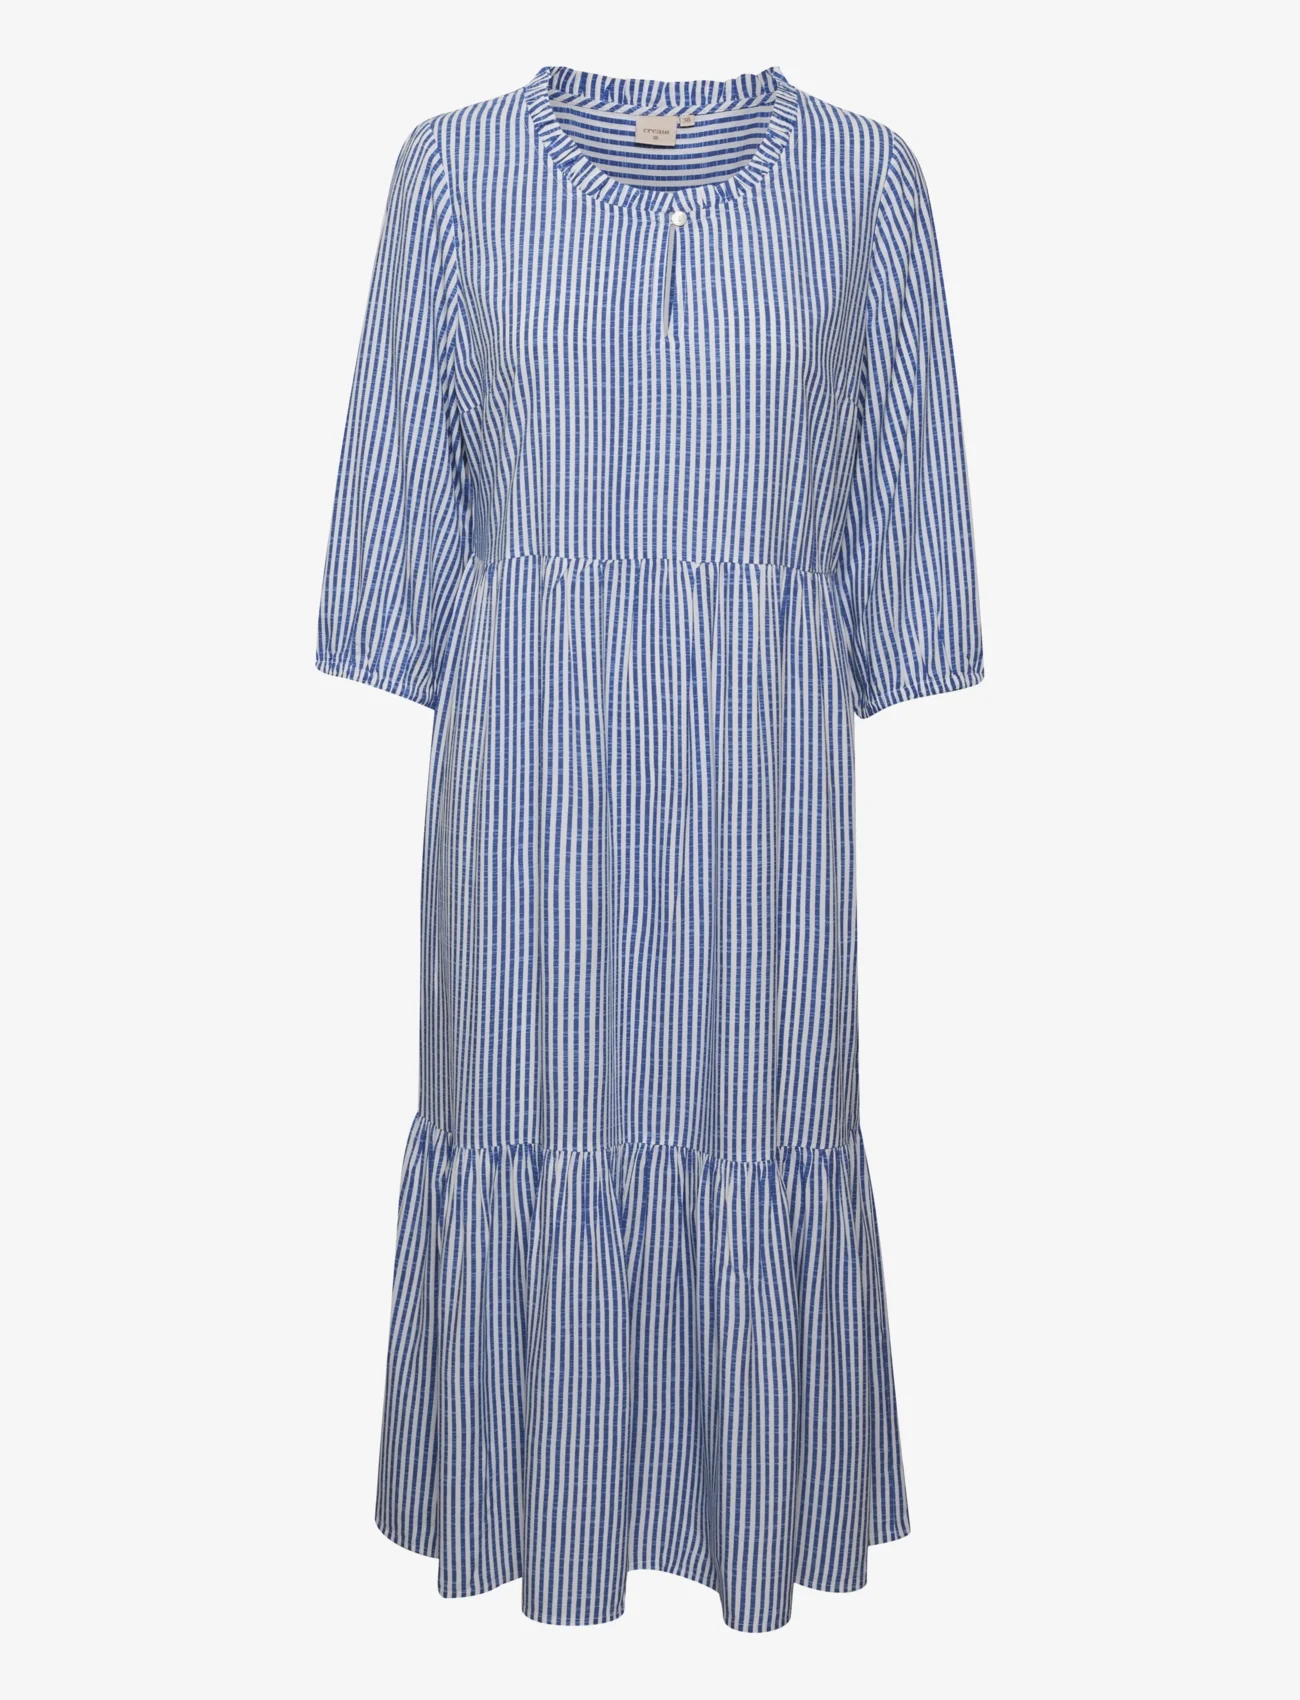 Cream - CRTiah Flounce Dress - Kim Fit - summer dresses - blue milkboy - 1